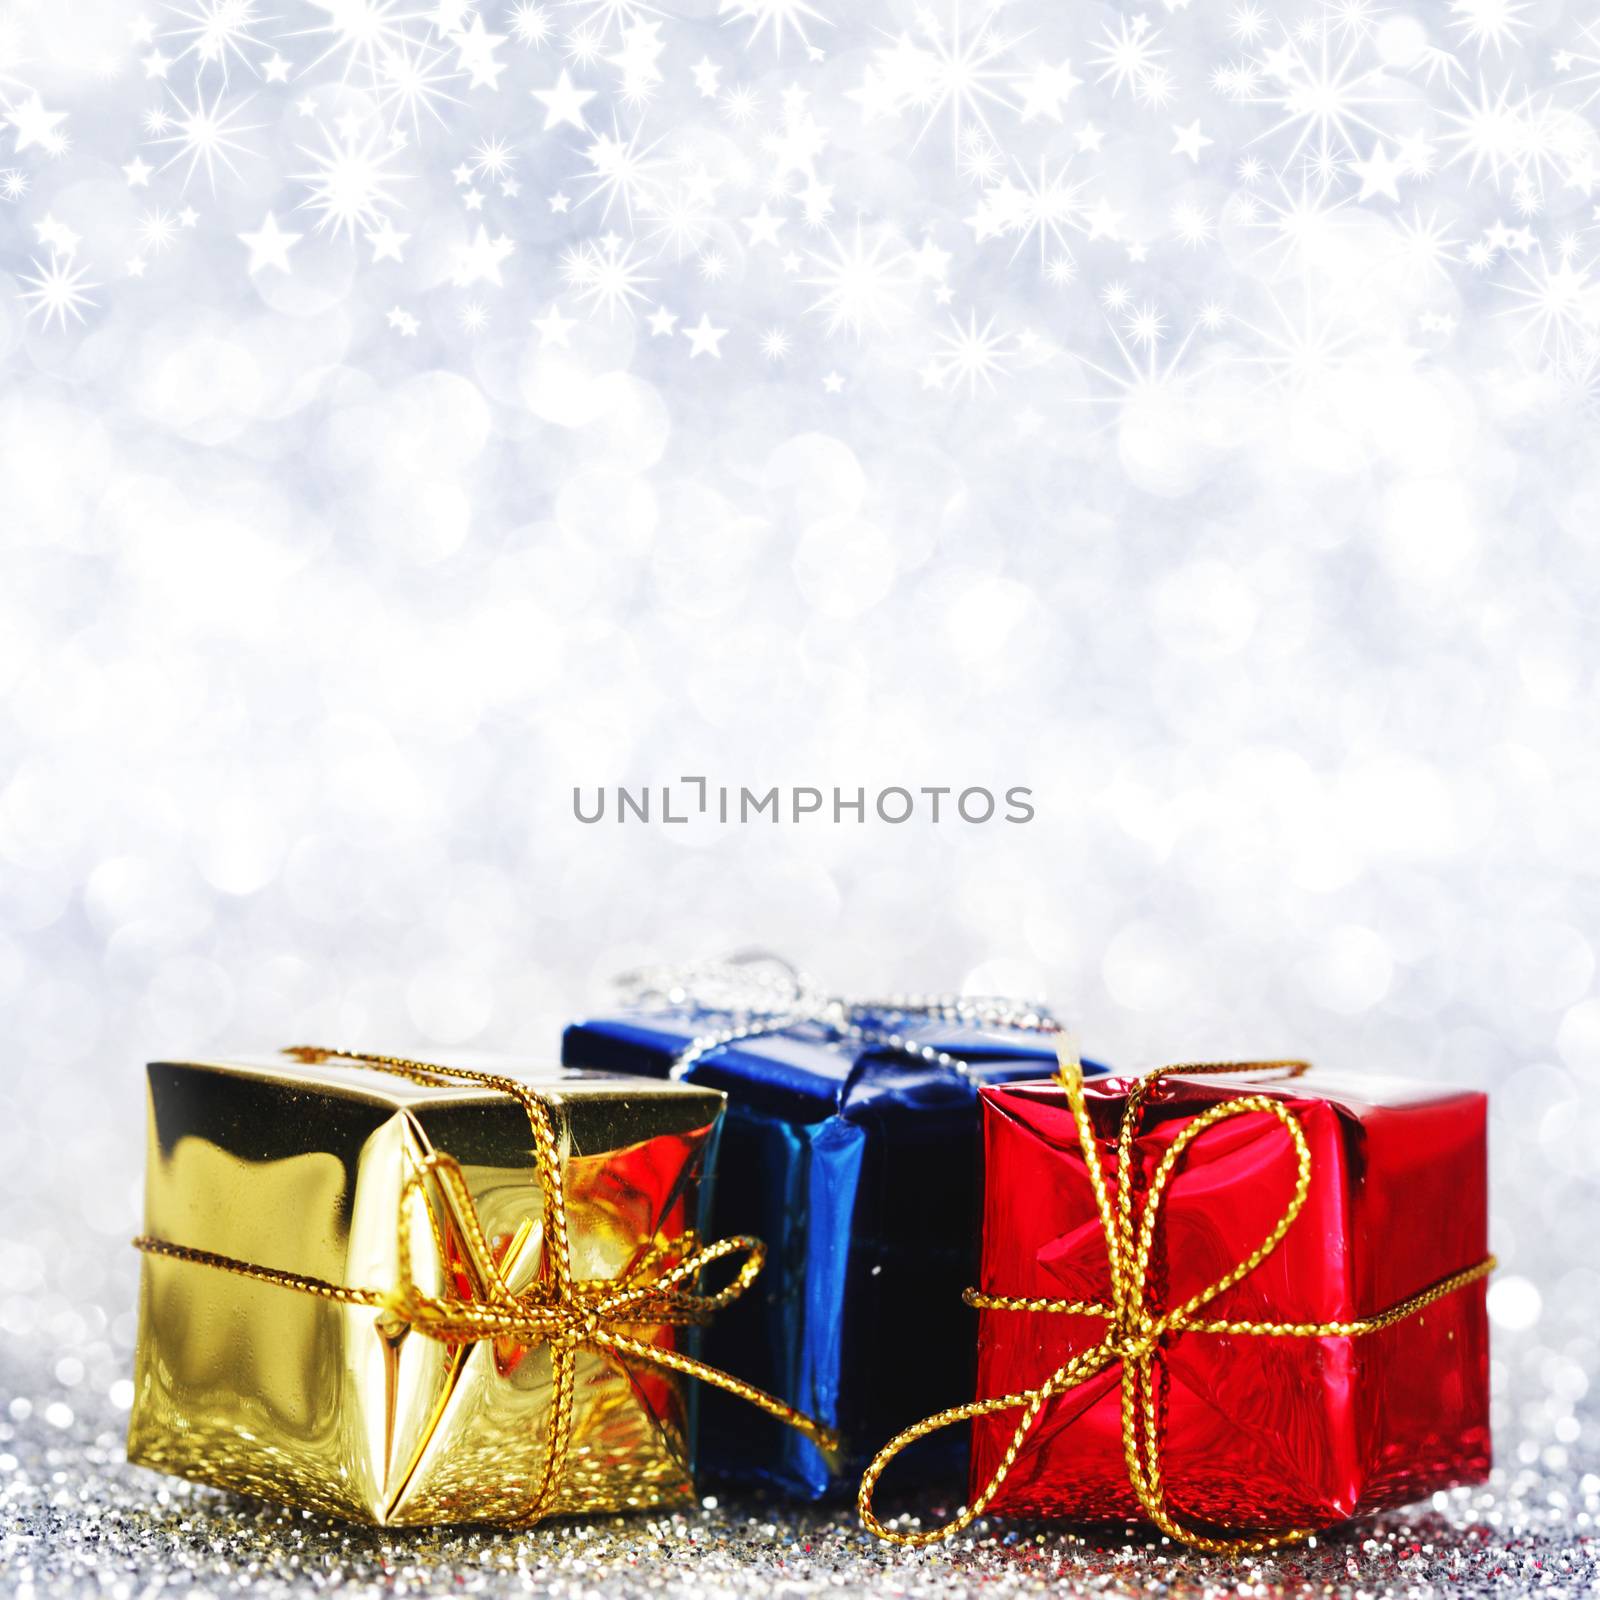 Christmas gift boxes on shiny background close-up